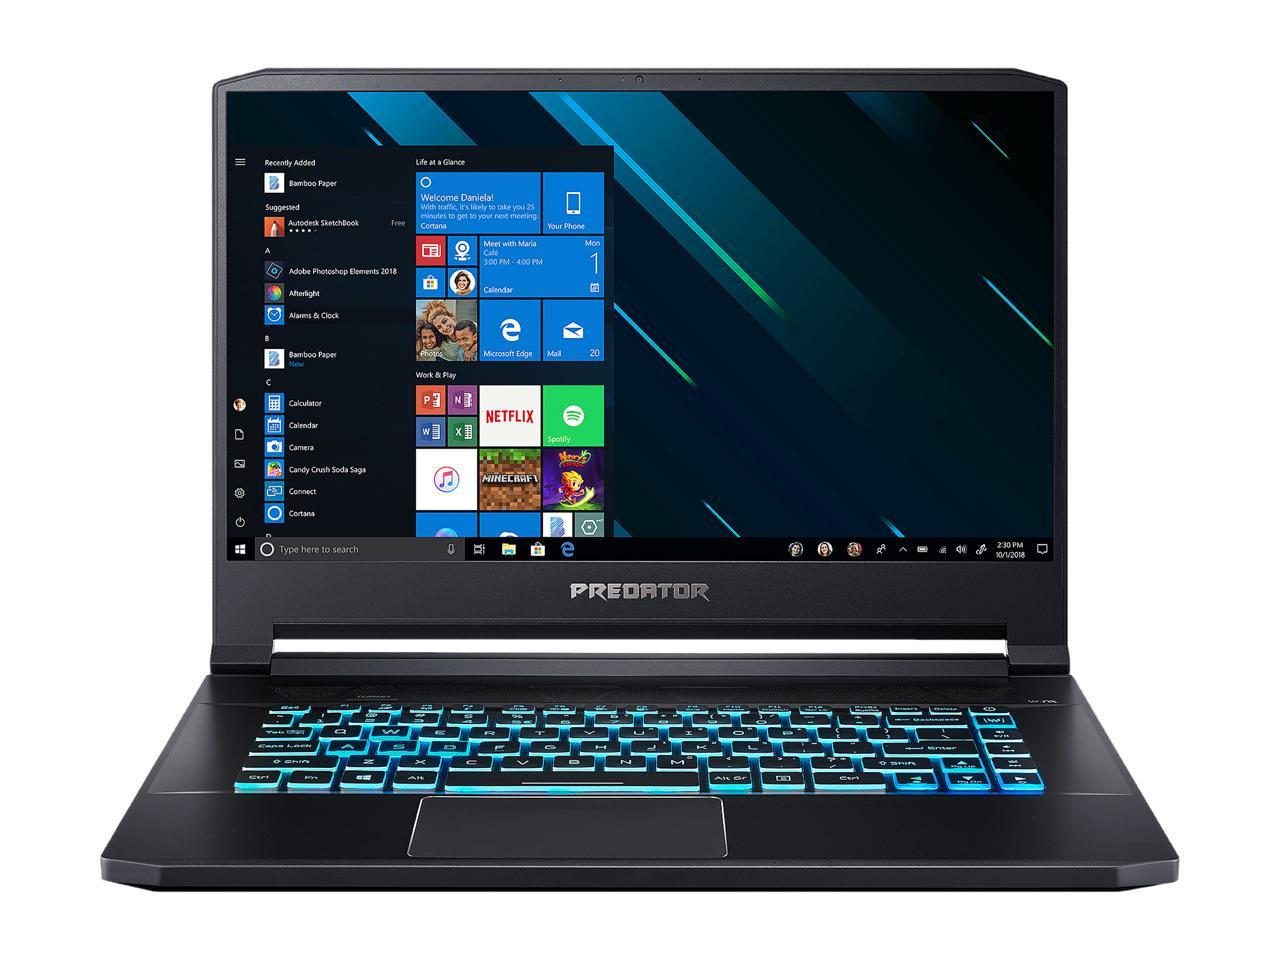 Acer - Gaming Laptop - 15.6" FHD IPS G-Sync 144 Hz, Intel Core i7-9750H (2.60 GHz), NVIDIA GeForce RTX 2080 Max-Q, 32 GB RAM, 1 TB SSD, Windows 10 Home 64-bit, Predator Triton 500 (PT515-51-73Z5)